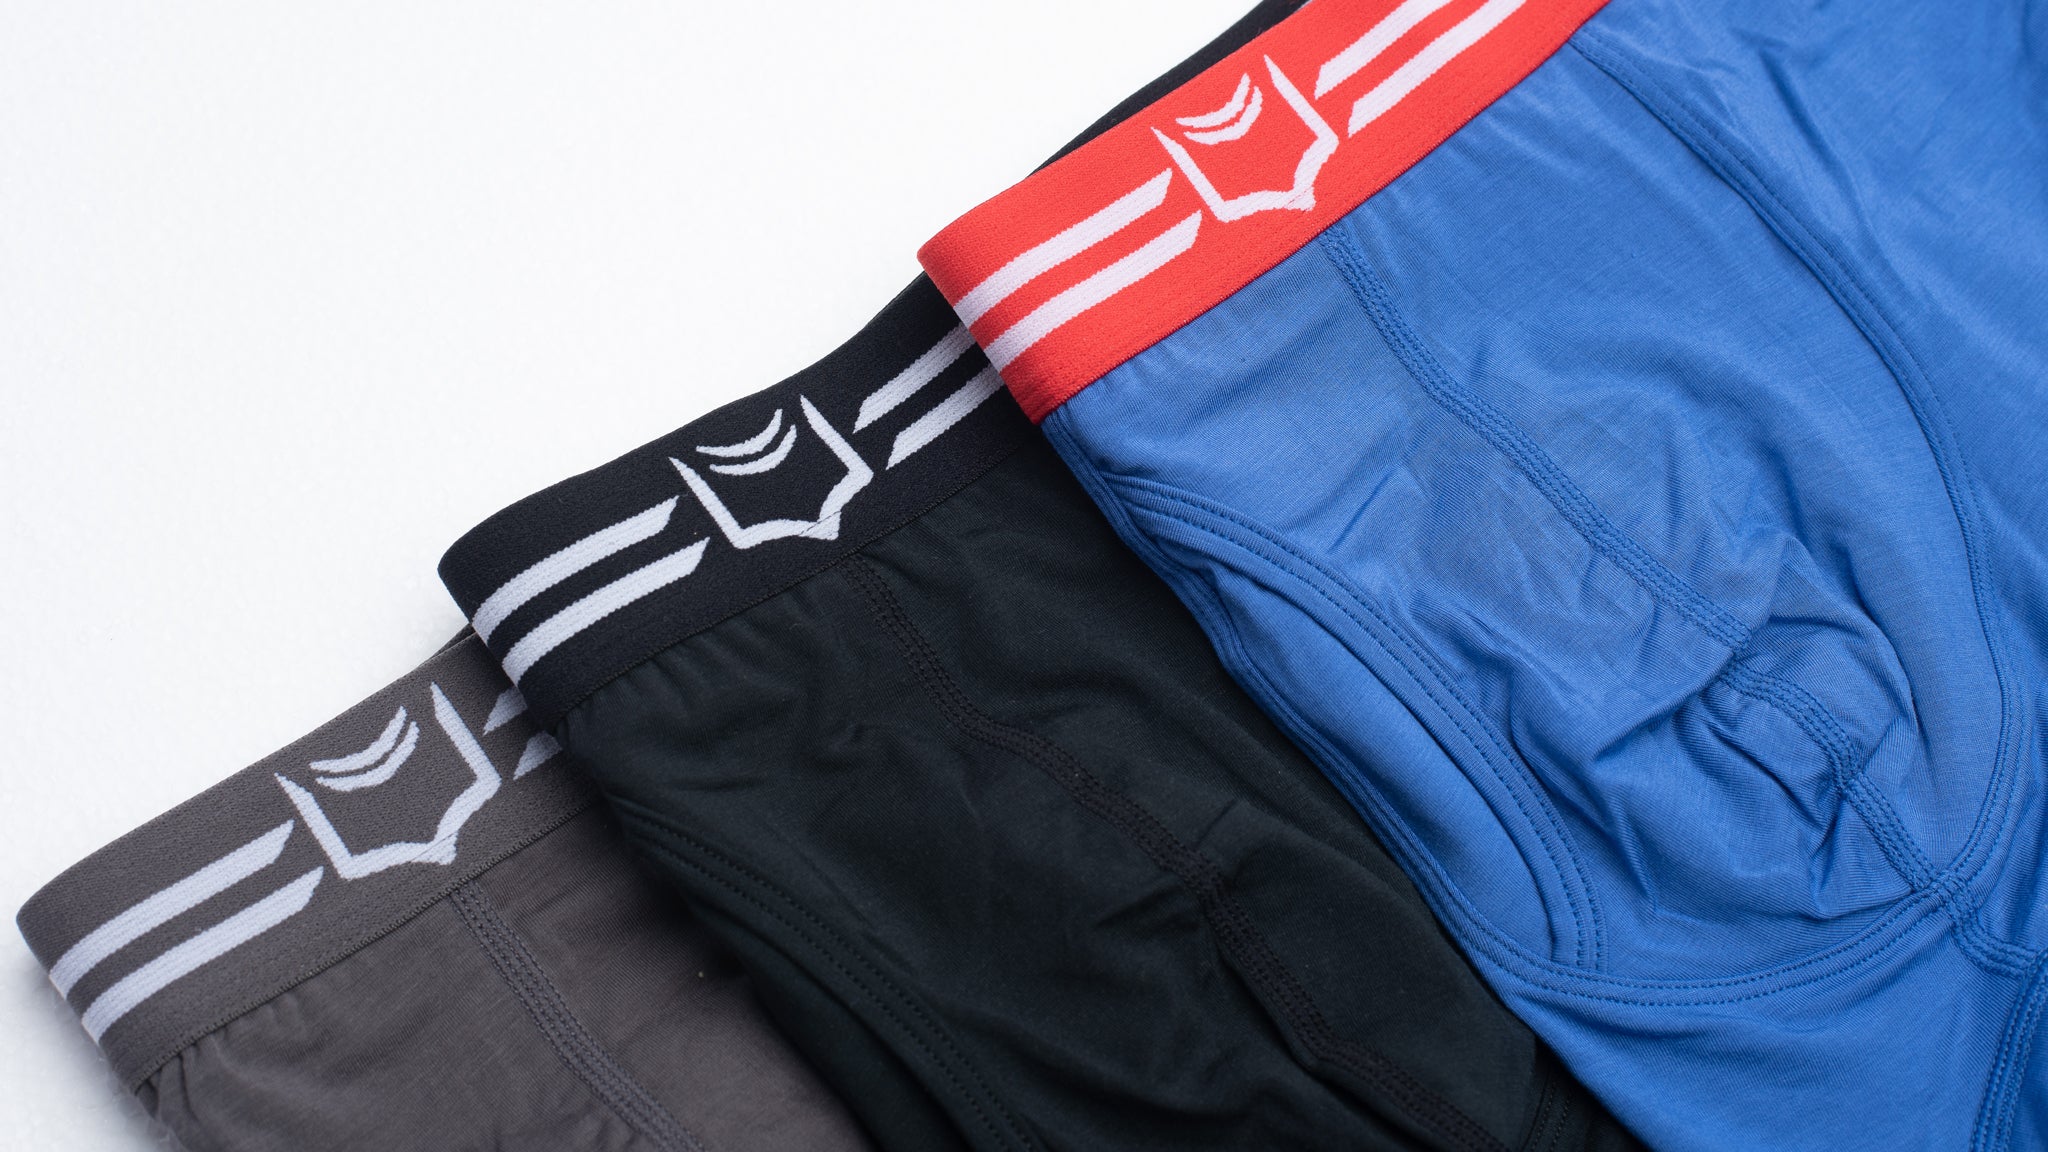 Biziza Men's Underwear Micro Modal Dual Pouch Trunks Support Ball Pouch  Bulge Enhancing Boxer Briefs for Men Black M 